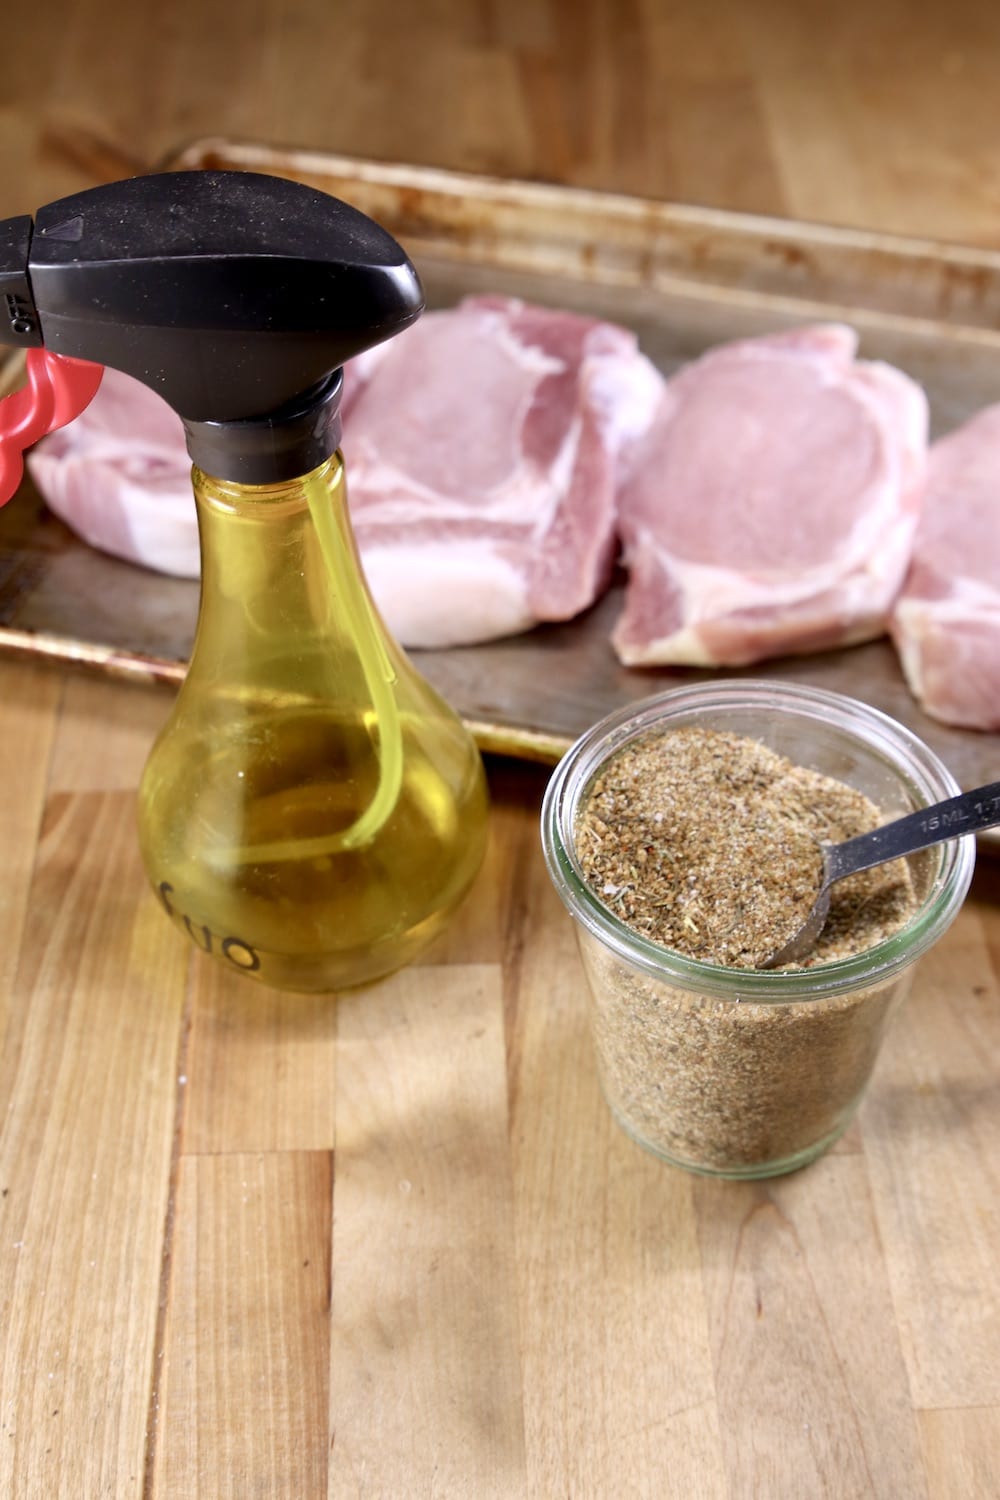 ingredients for grilled pork chops -dry rub, olive oil